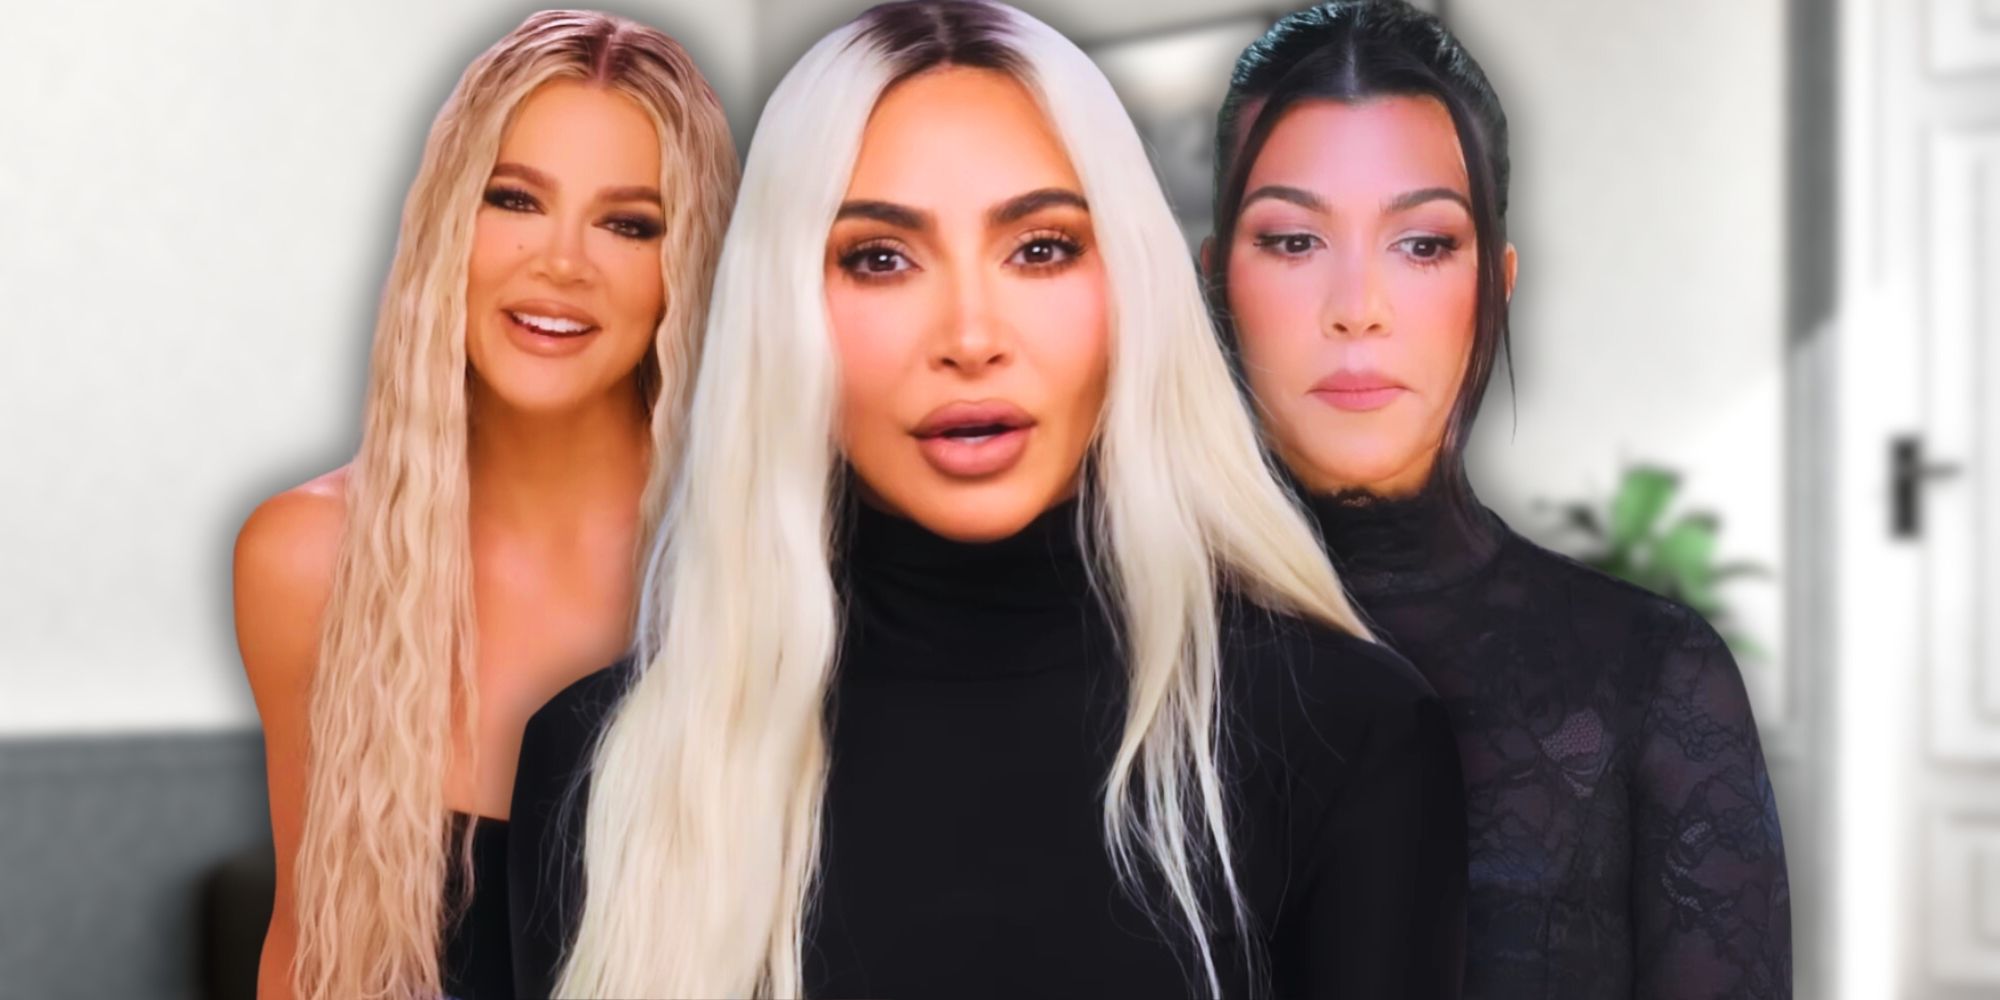 El tráiler de la temporada 5 de The Kardashians muestra la intensa pelea de Khloé Kardashian con las hermanas Kim y Kourtney